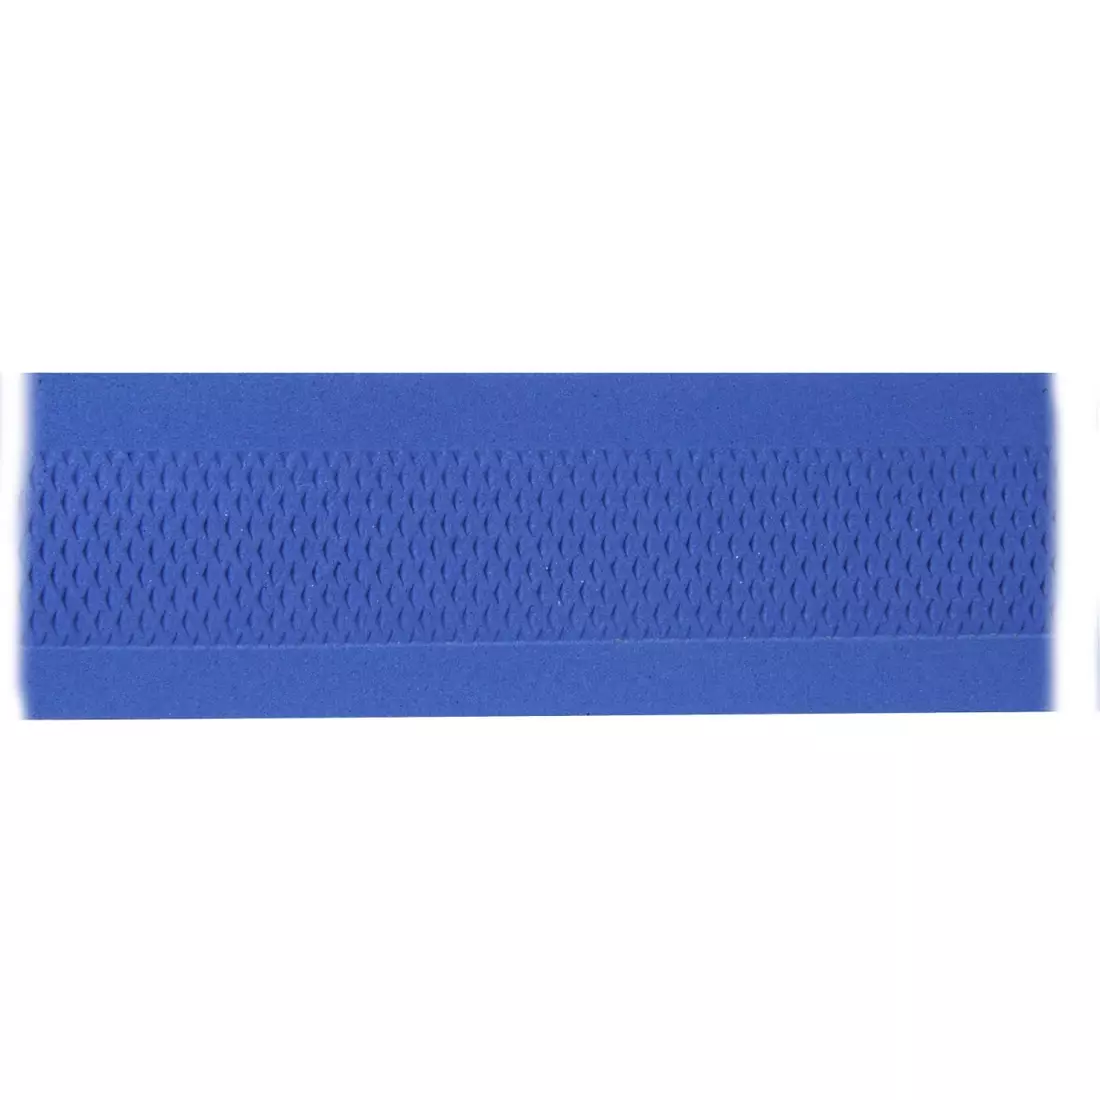 FORCE EVA perforated handlebar tape blue